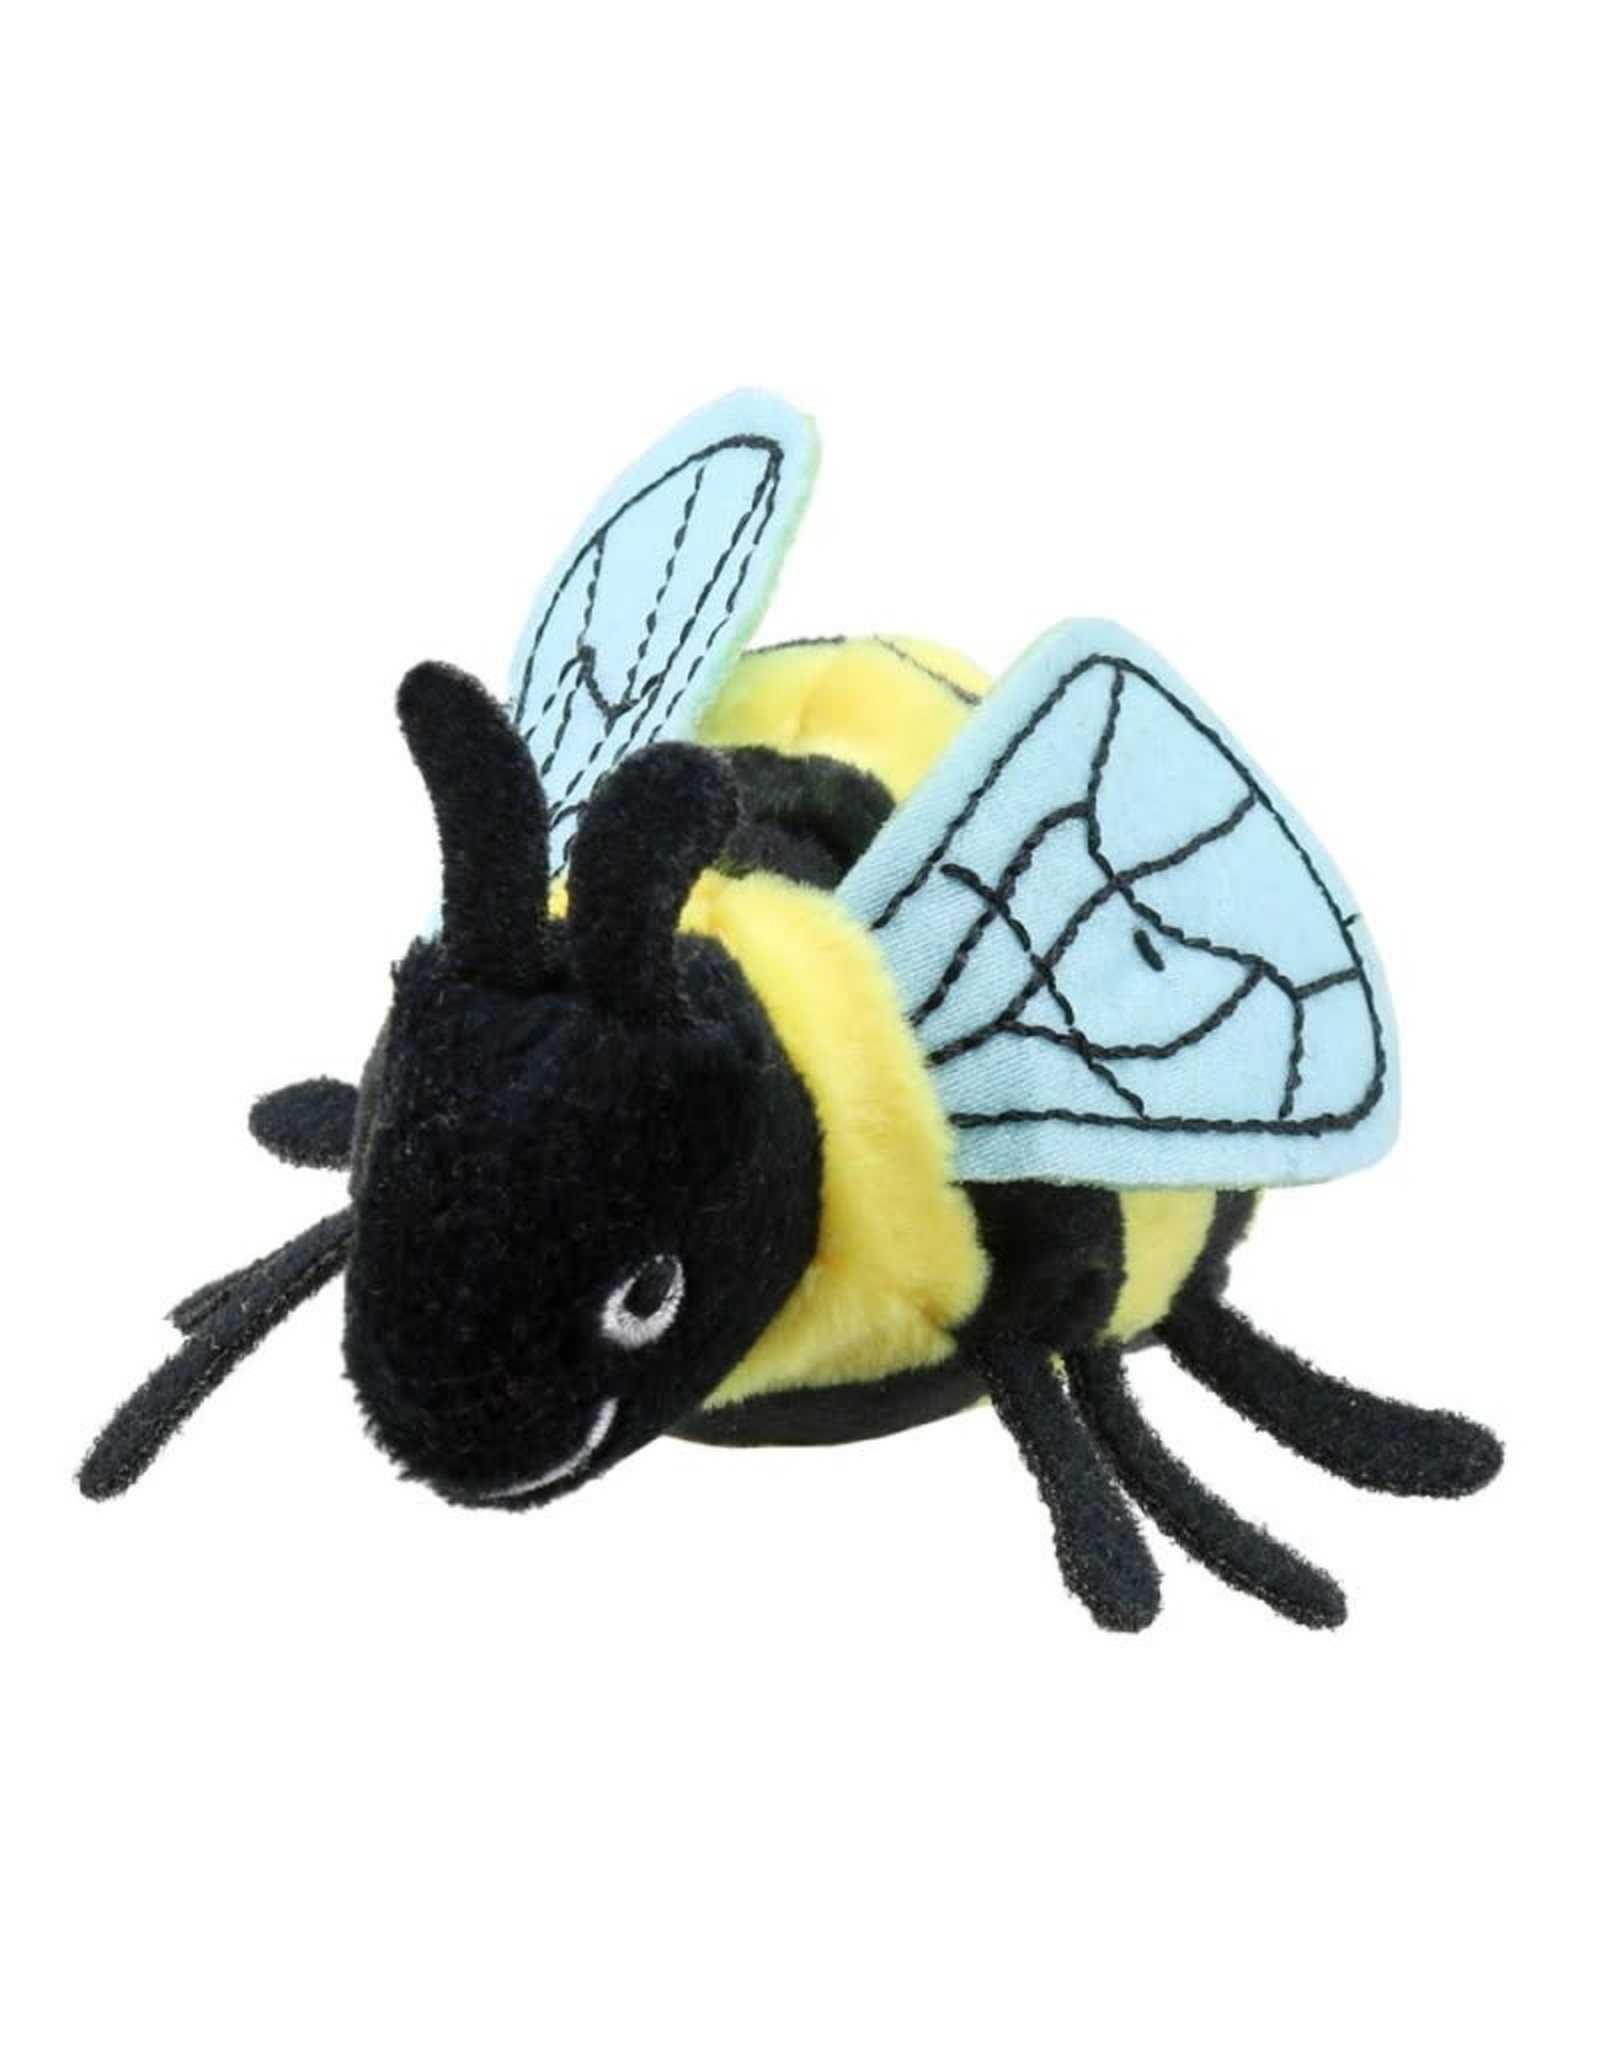 4" Bumble Bee